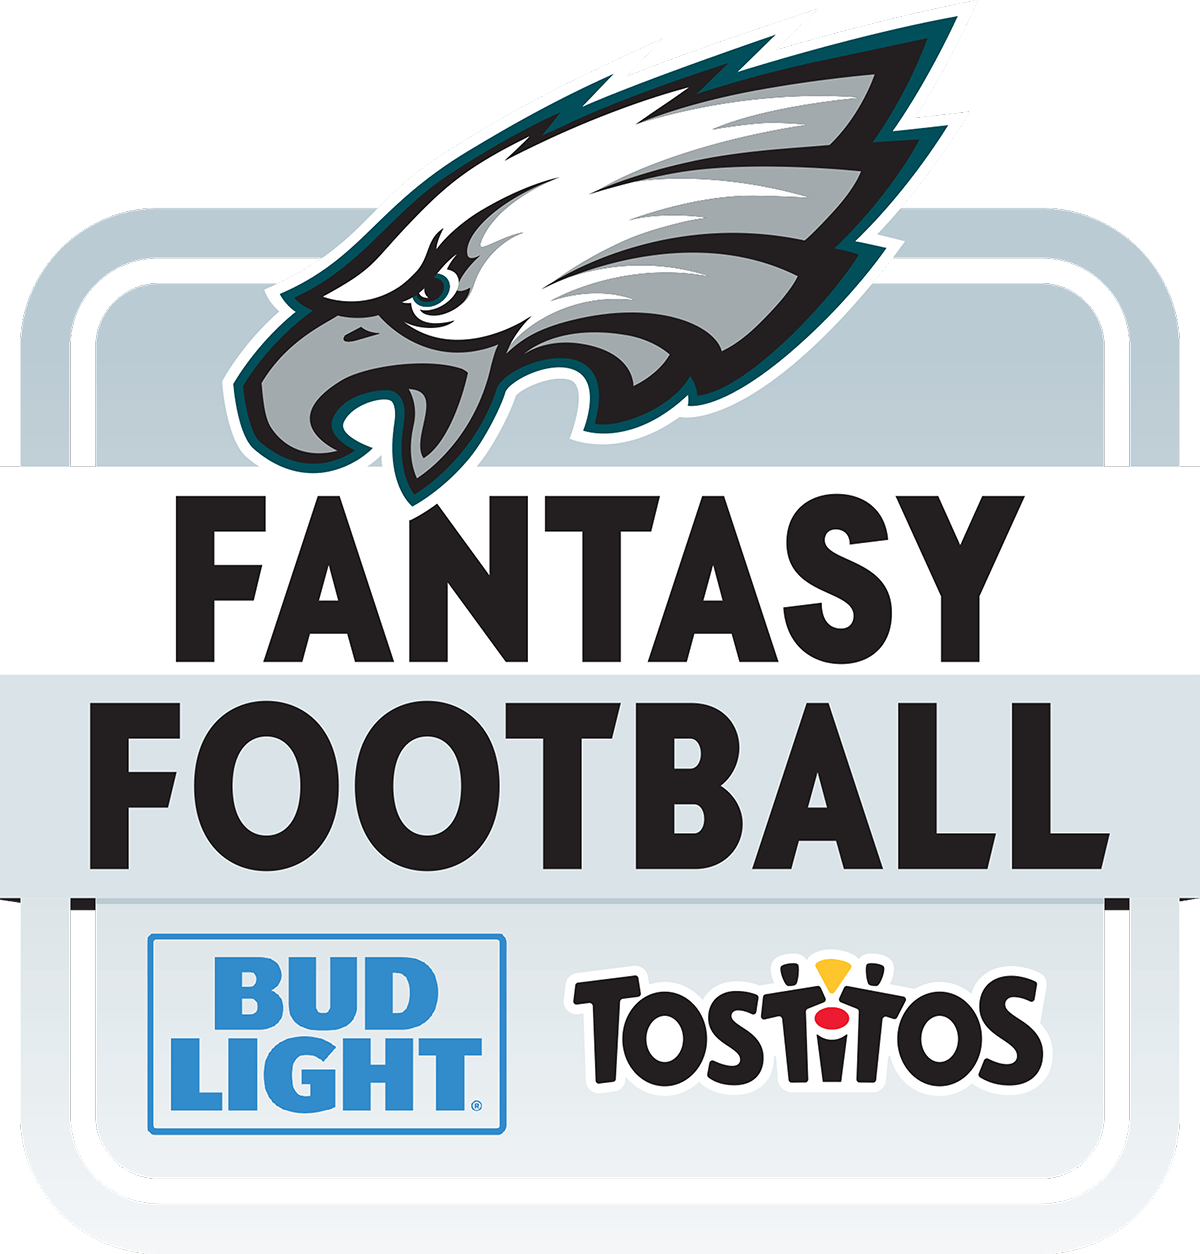 Philadelphia Eagles Fantasy Football Draft Night